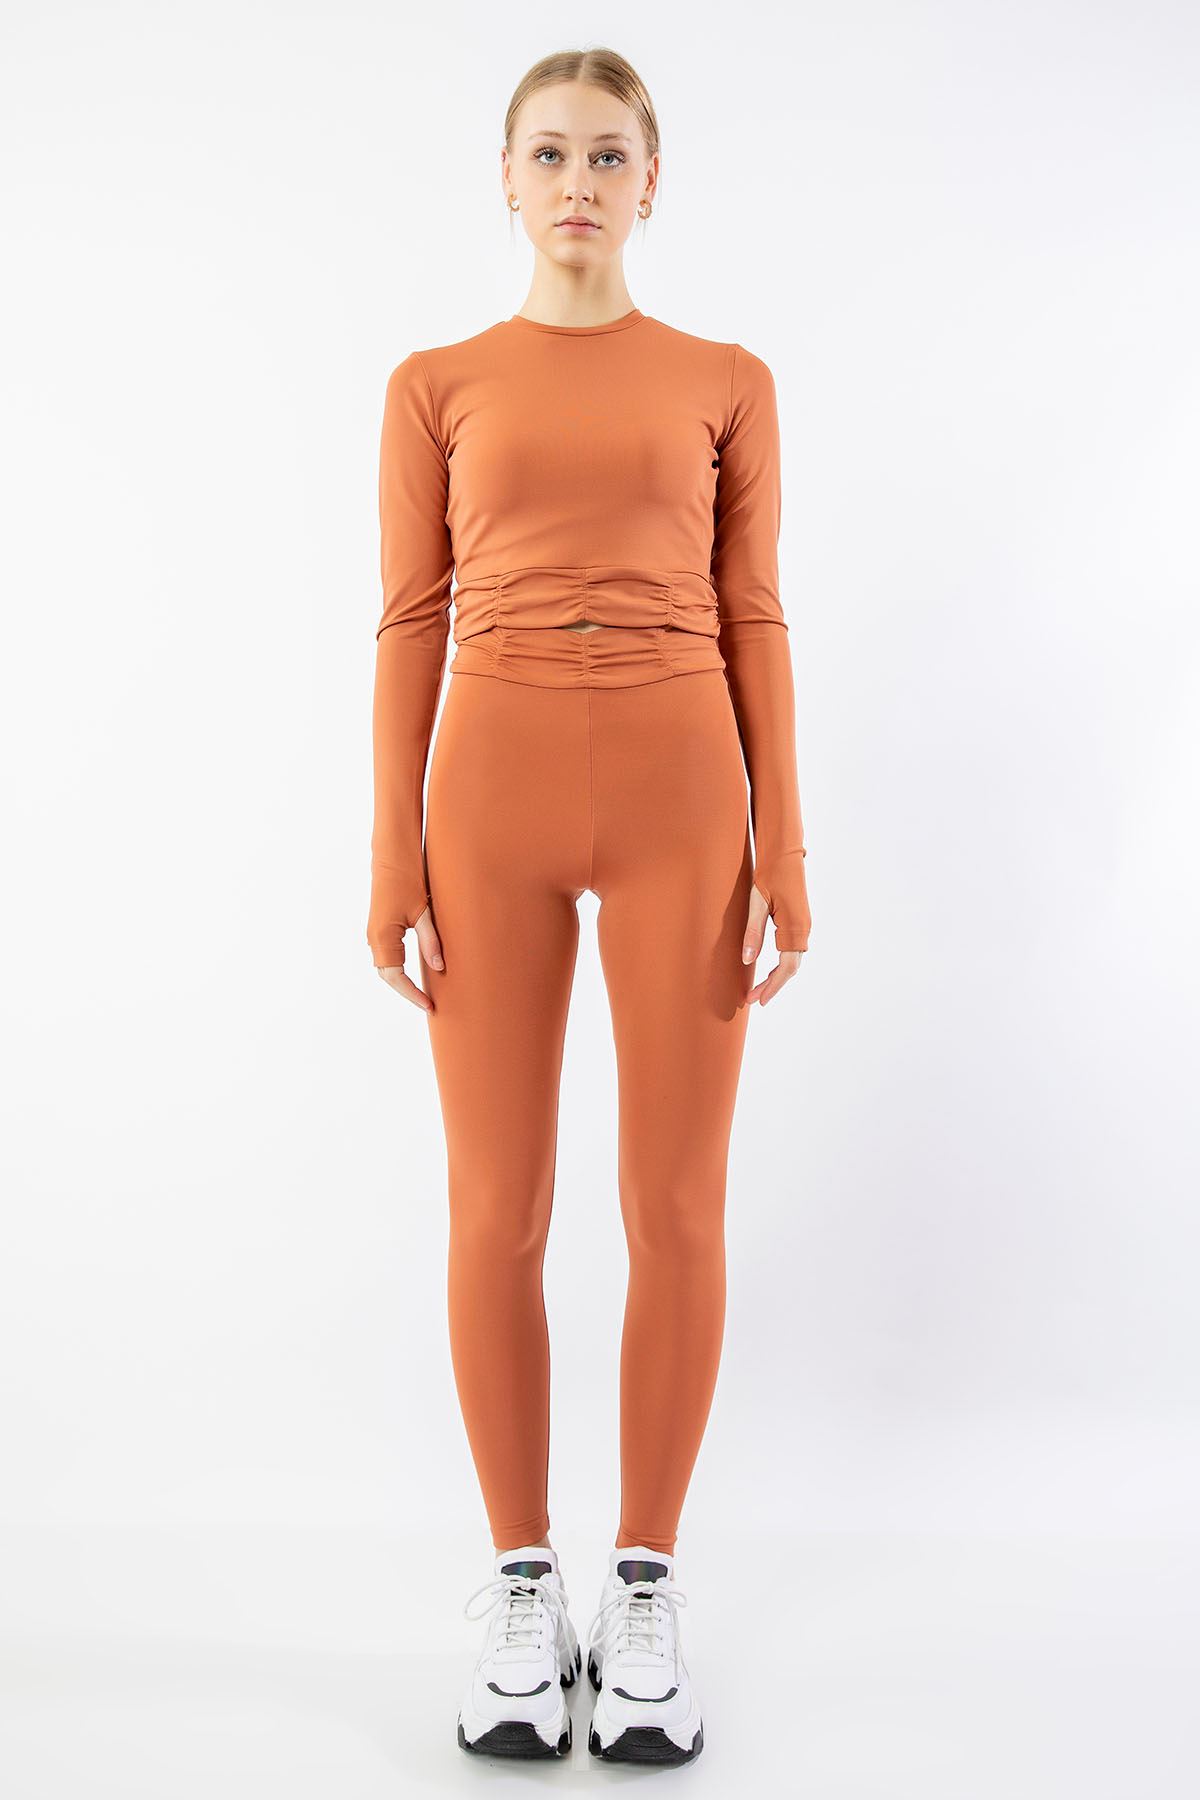 Scuba Fabric Long Shirred Women Tights Collection - Brick 